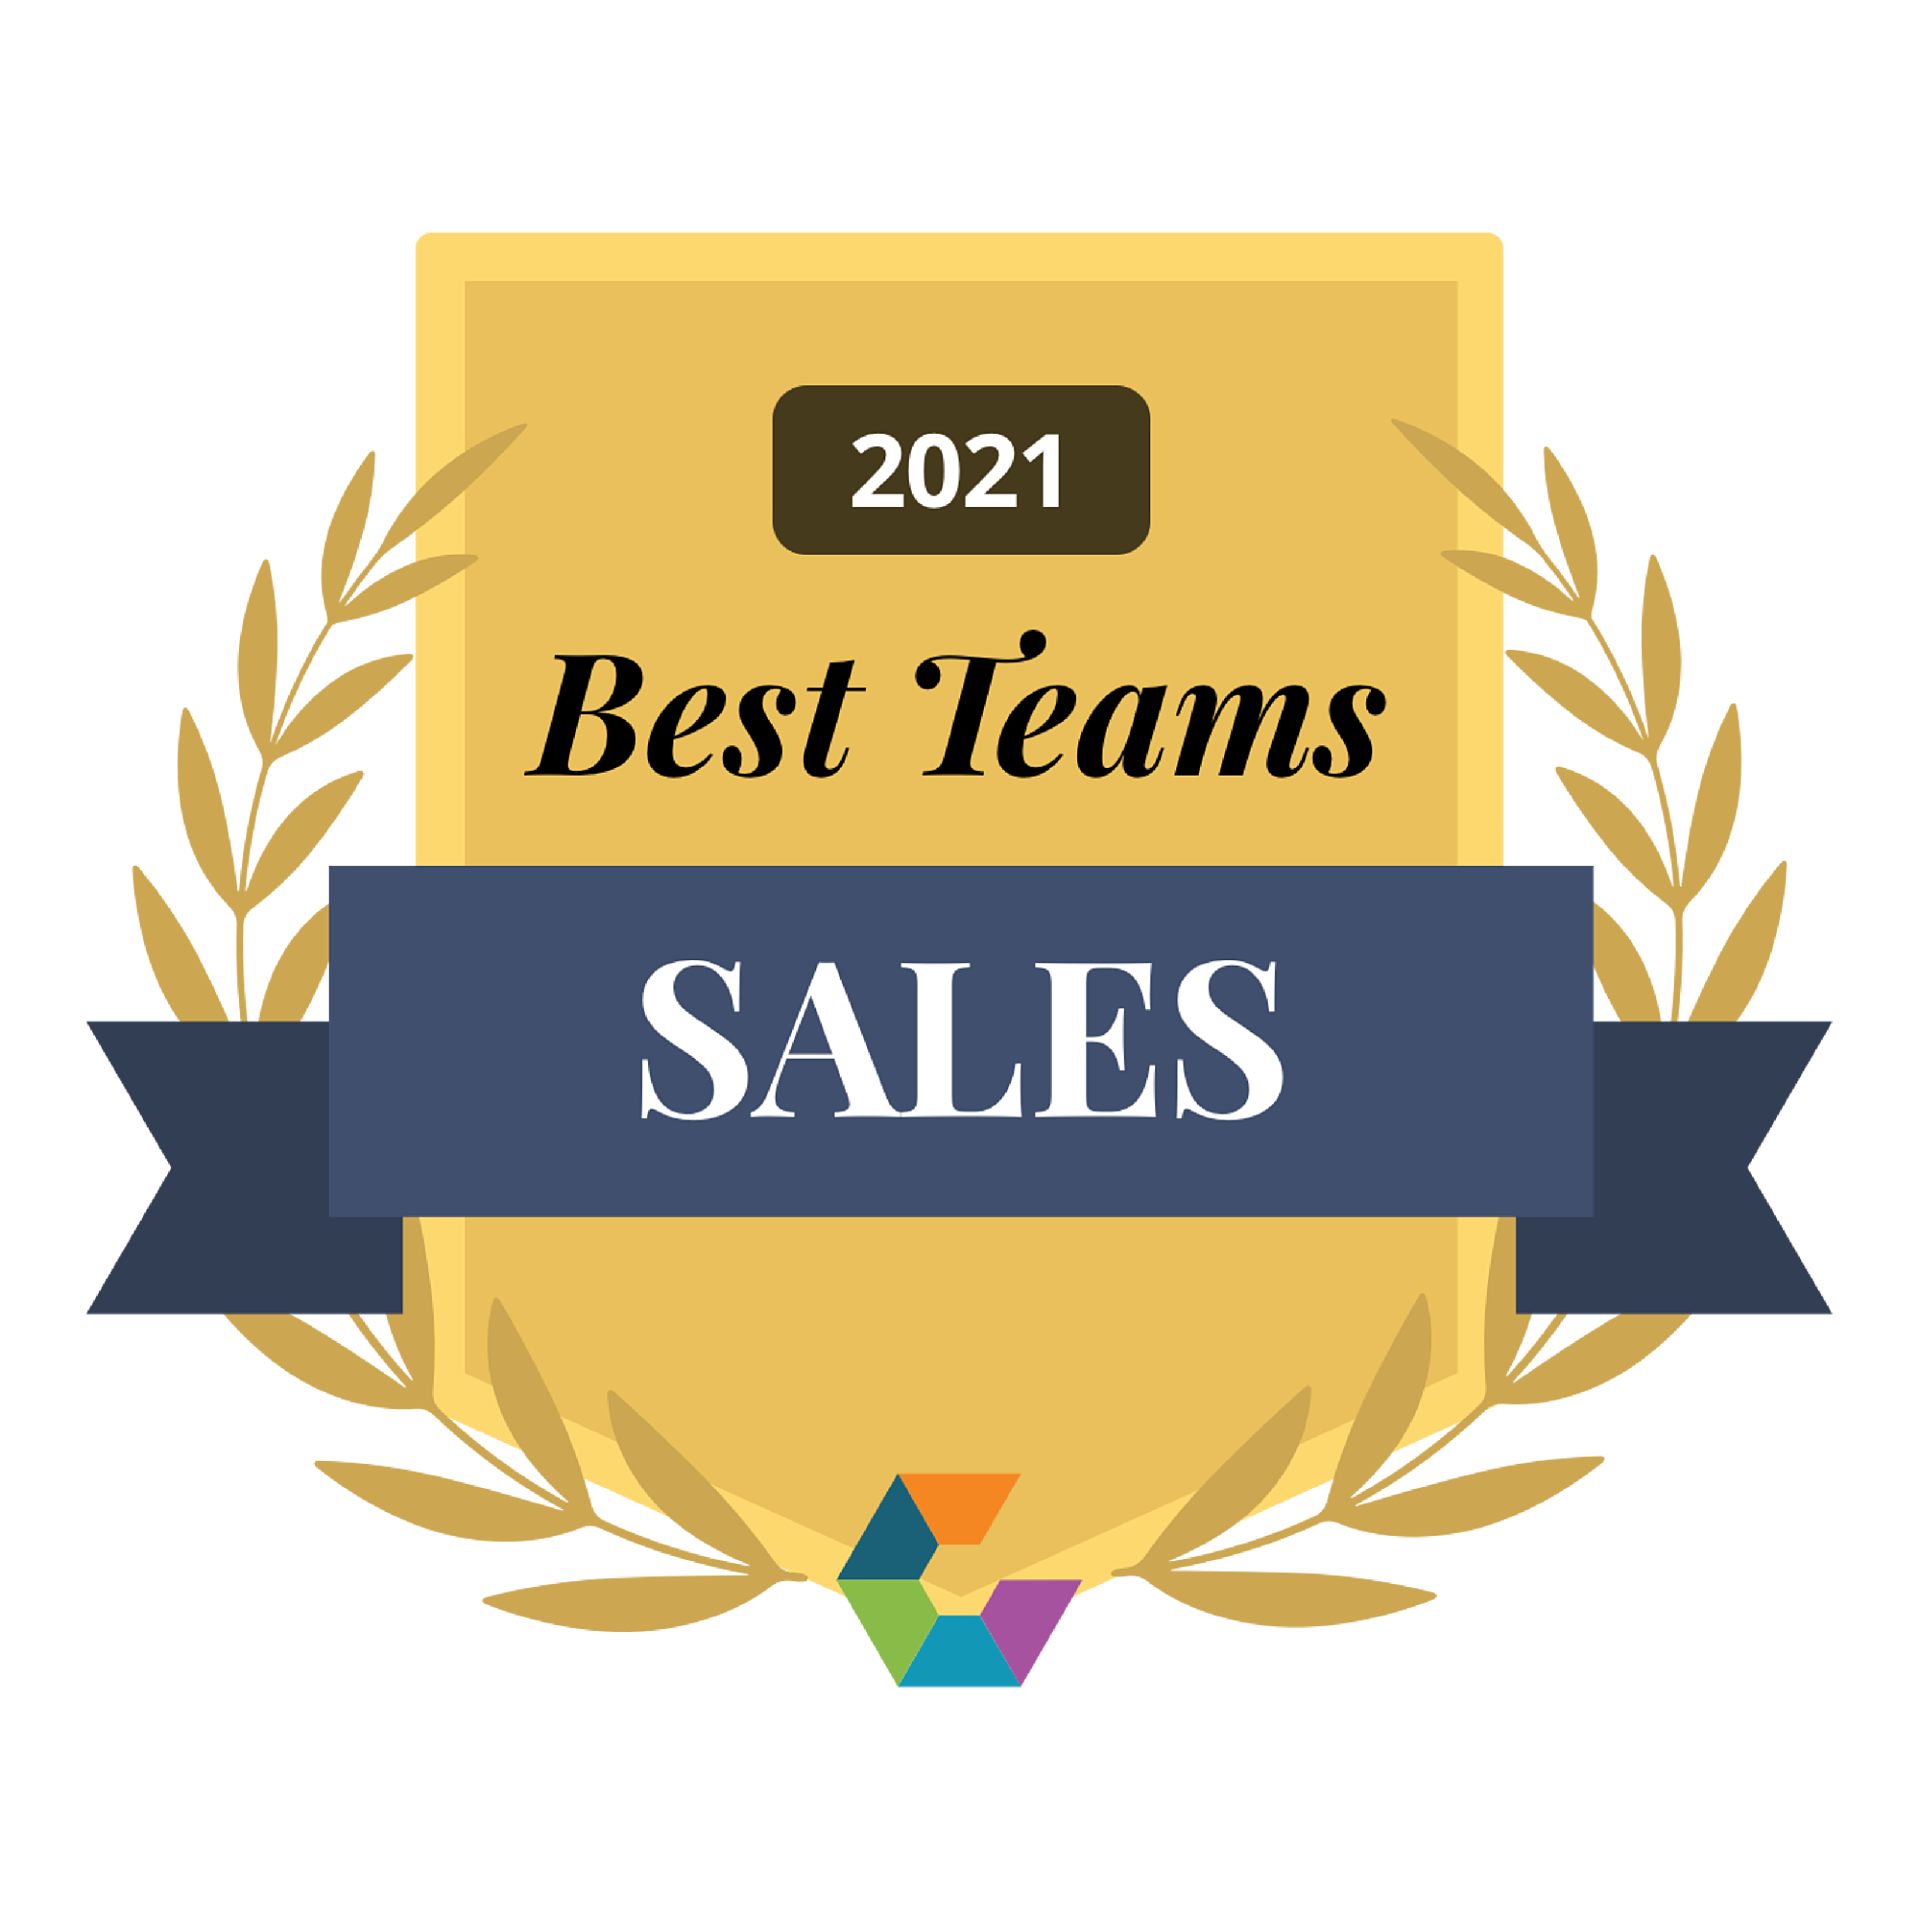 Comparably Award Best Teams Sales